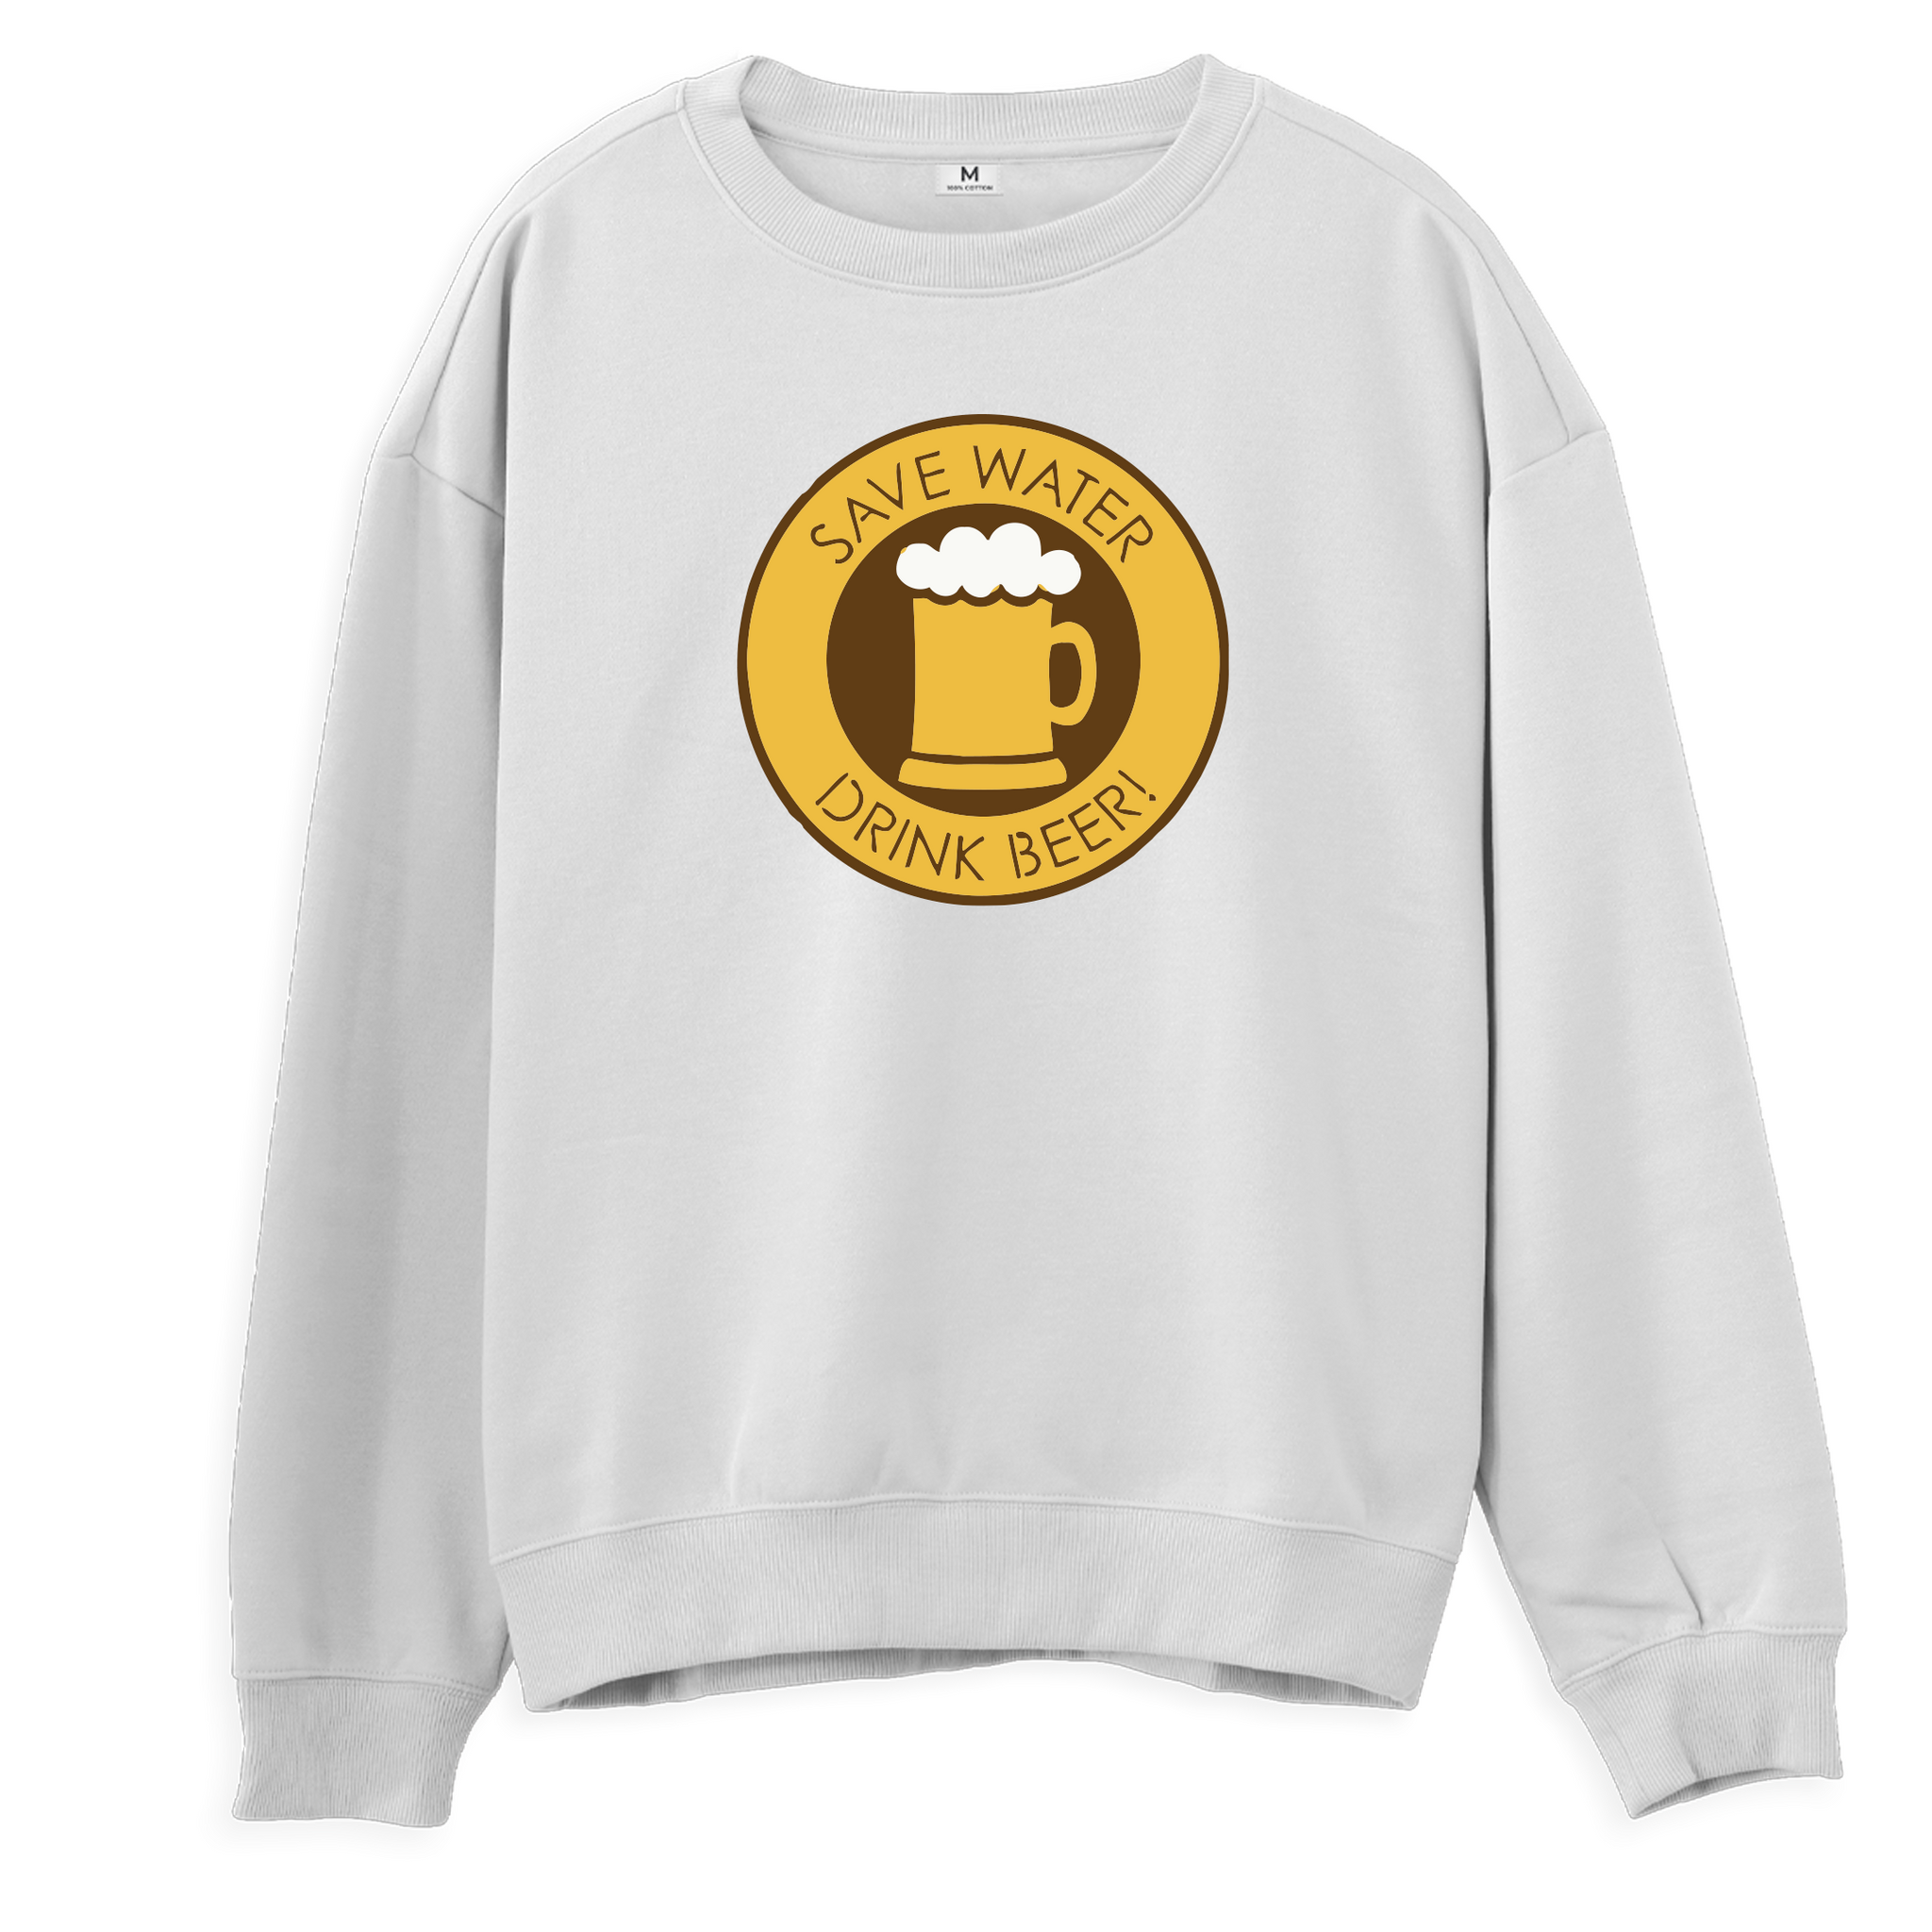 Save Water Drink Beer - Sweatshirt -Regular